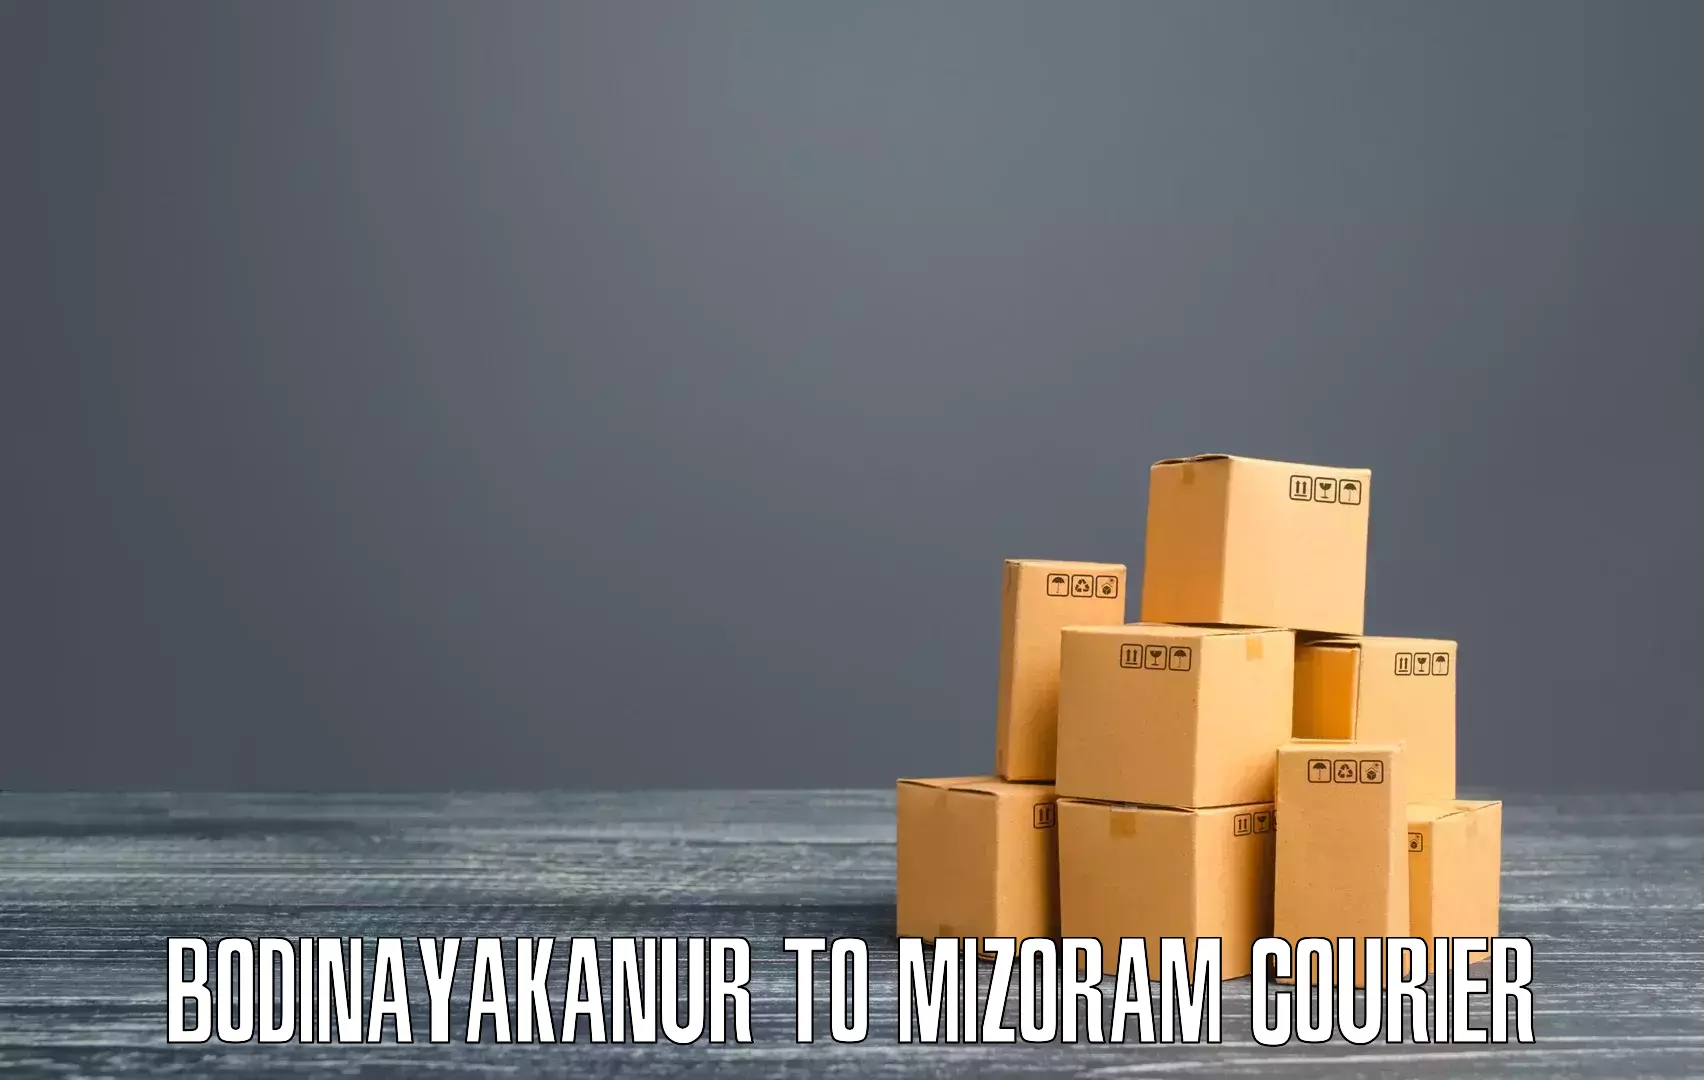 Advanced courier platforms Bodinayakanur to Aizawl